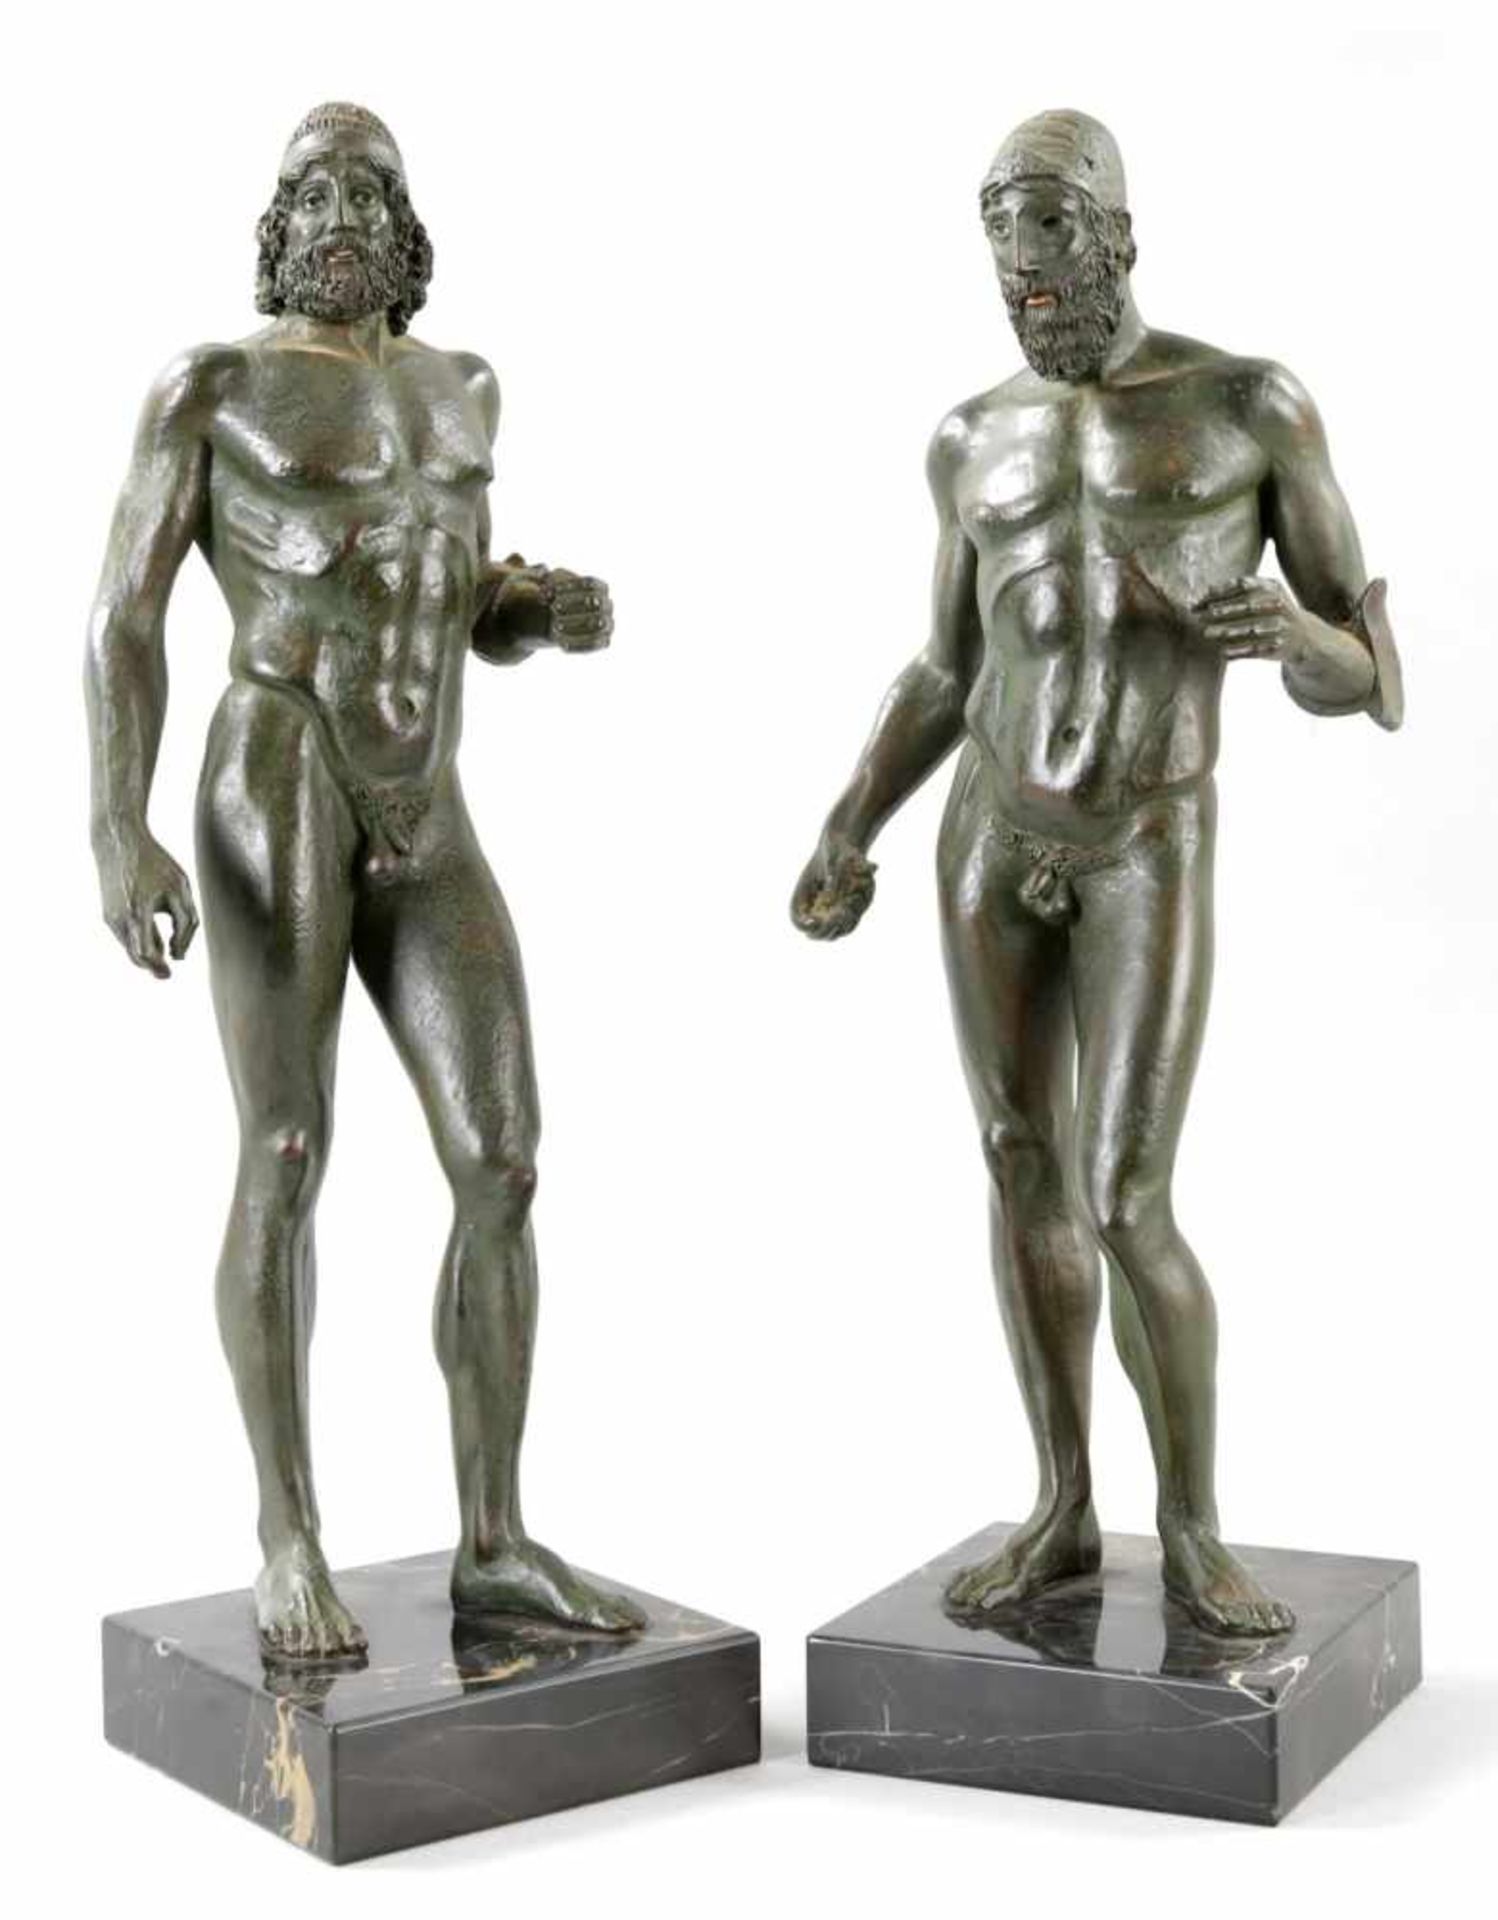 SkulpturenpaarMasseguß, 2.H.20.Jh. Nach den 1972 entdeckten Figuren "Heroen von Riace" in